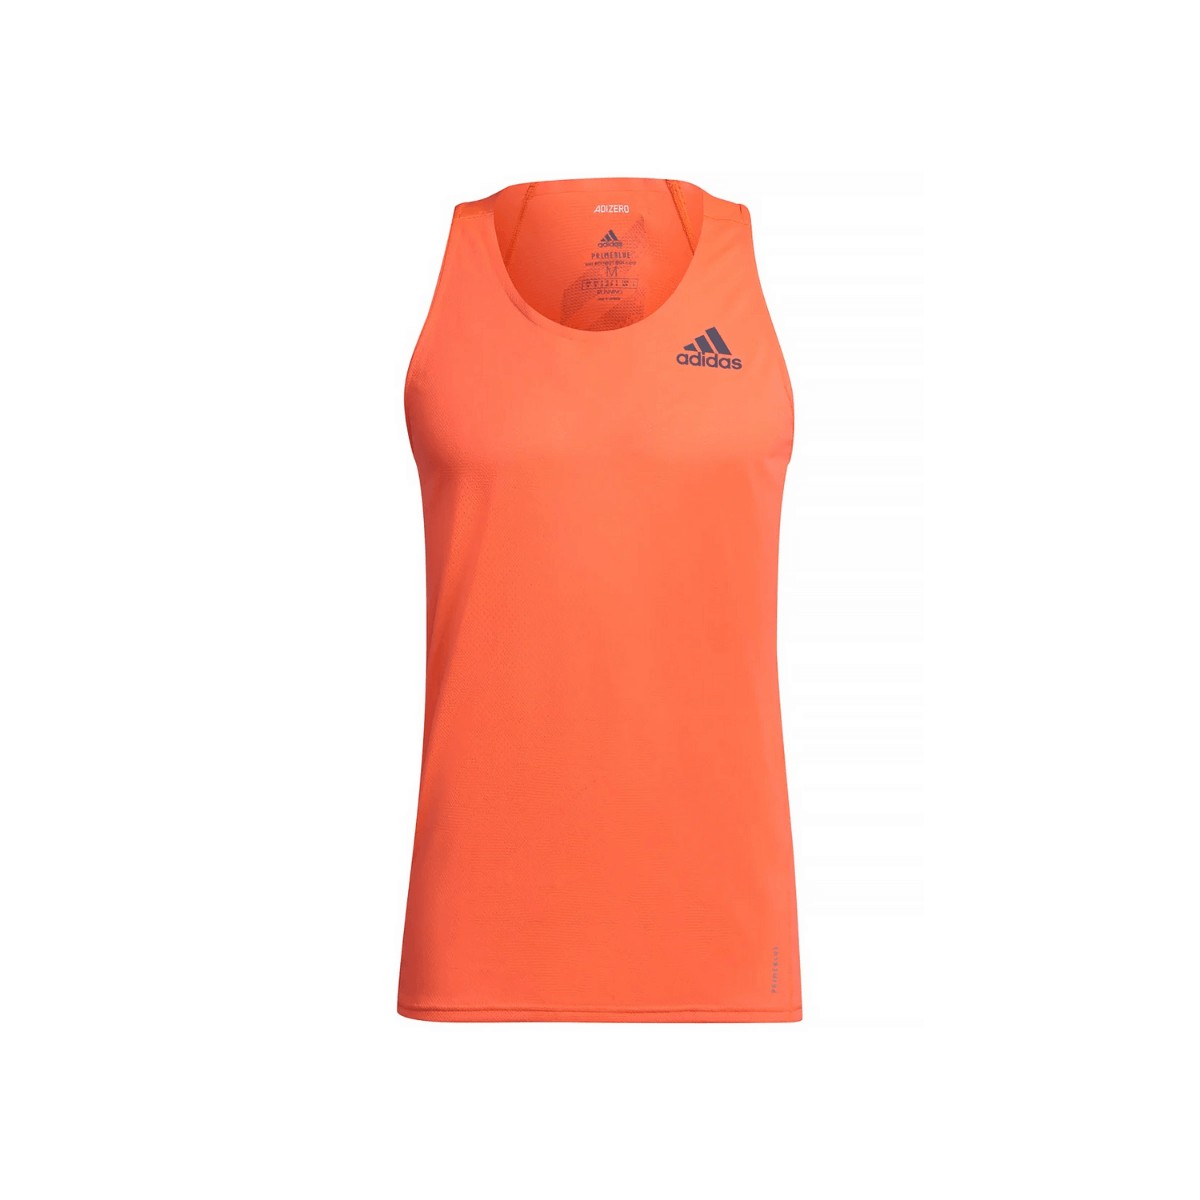 Adidas Adizero T-shirt sans manches orange, Taille XS